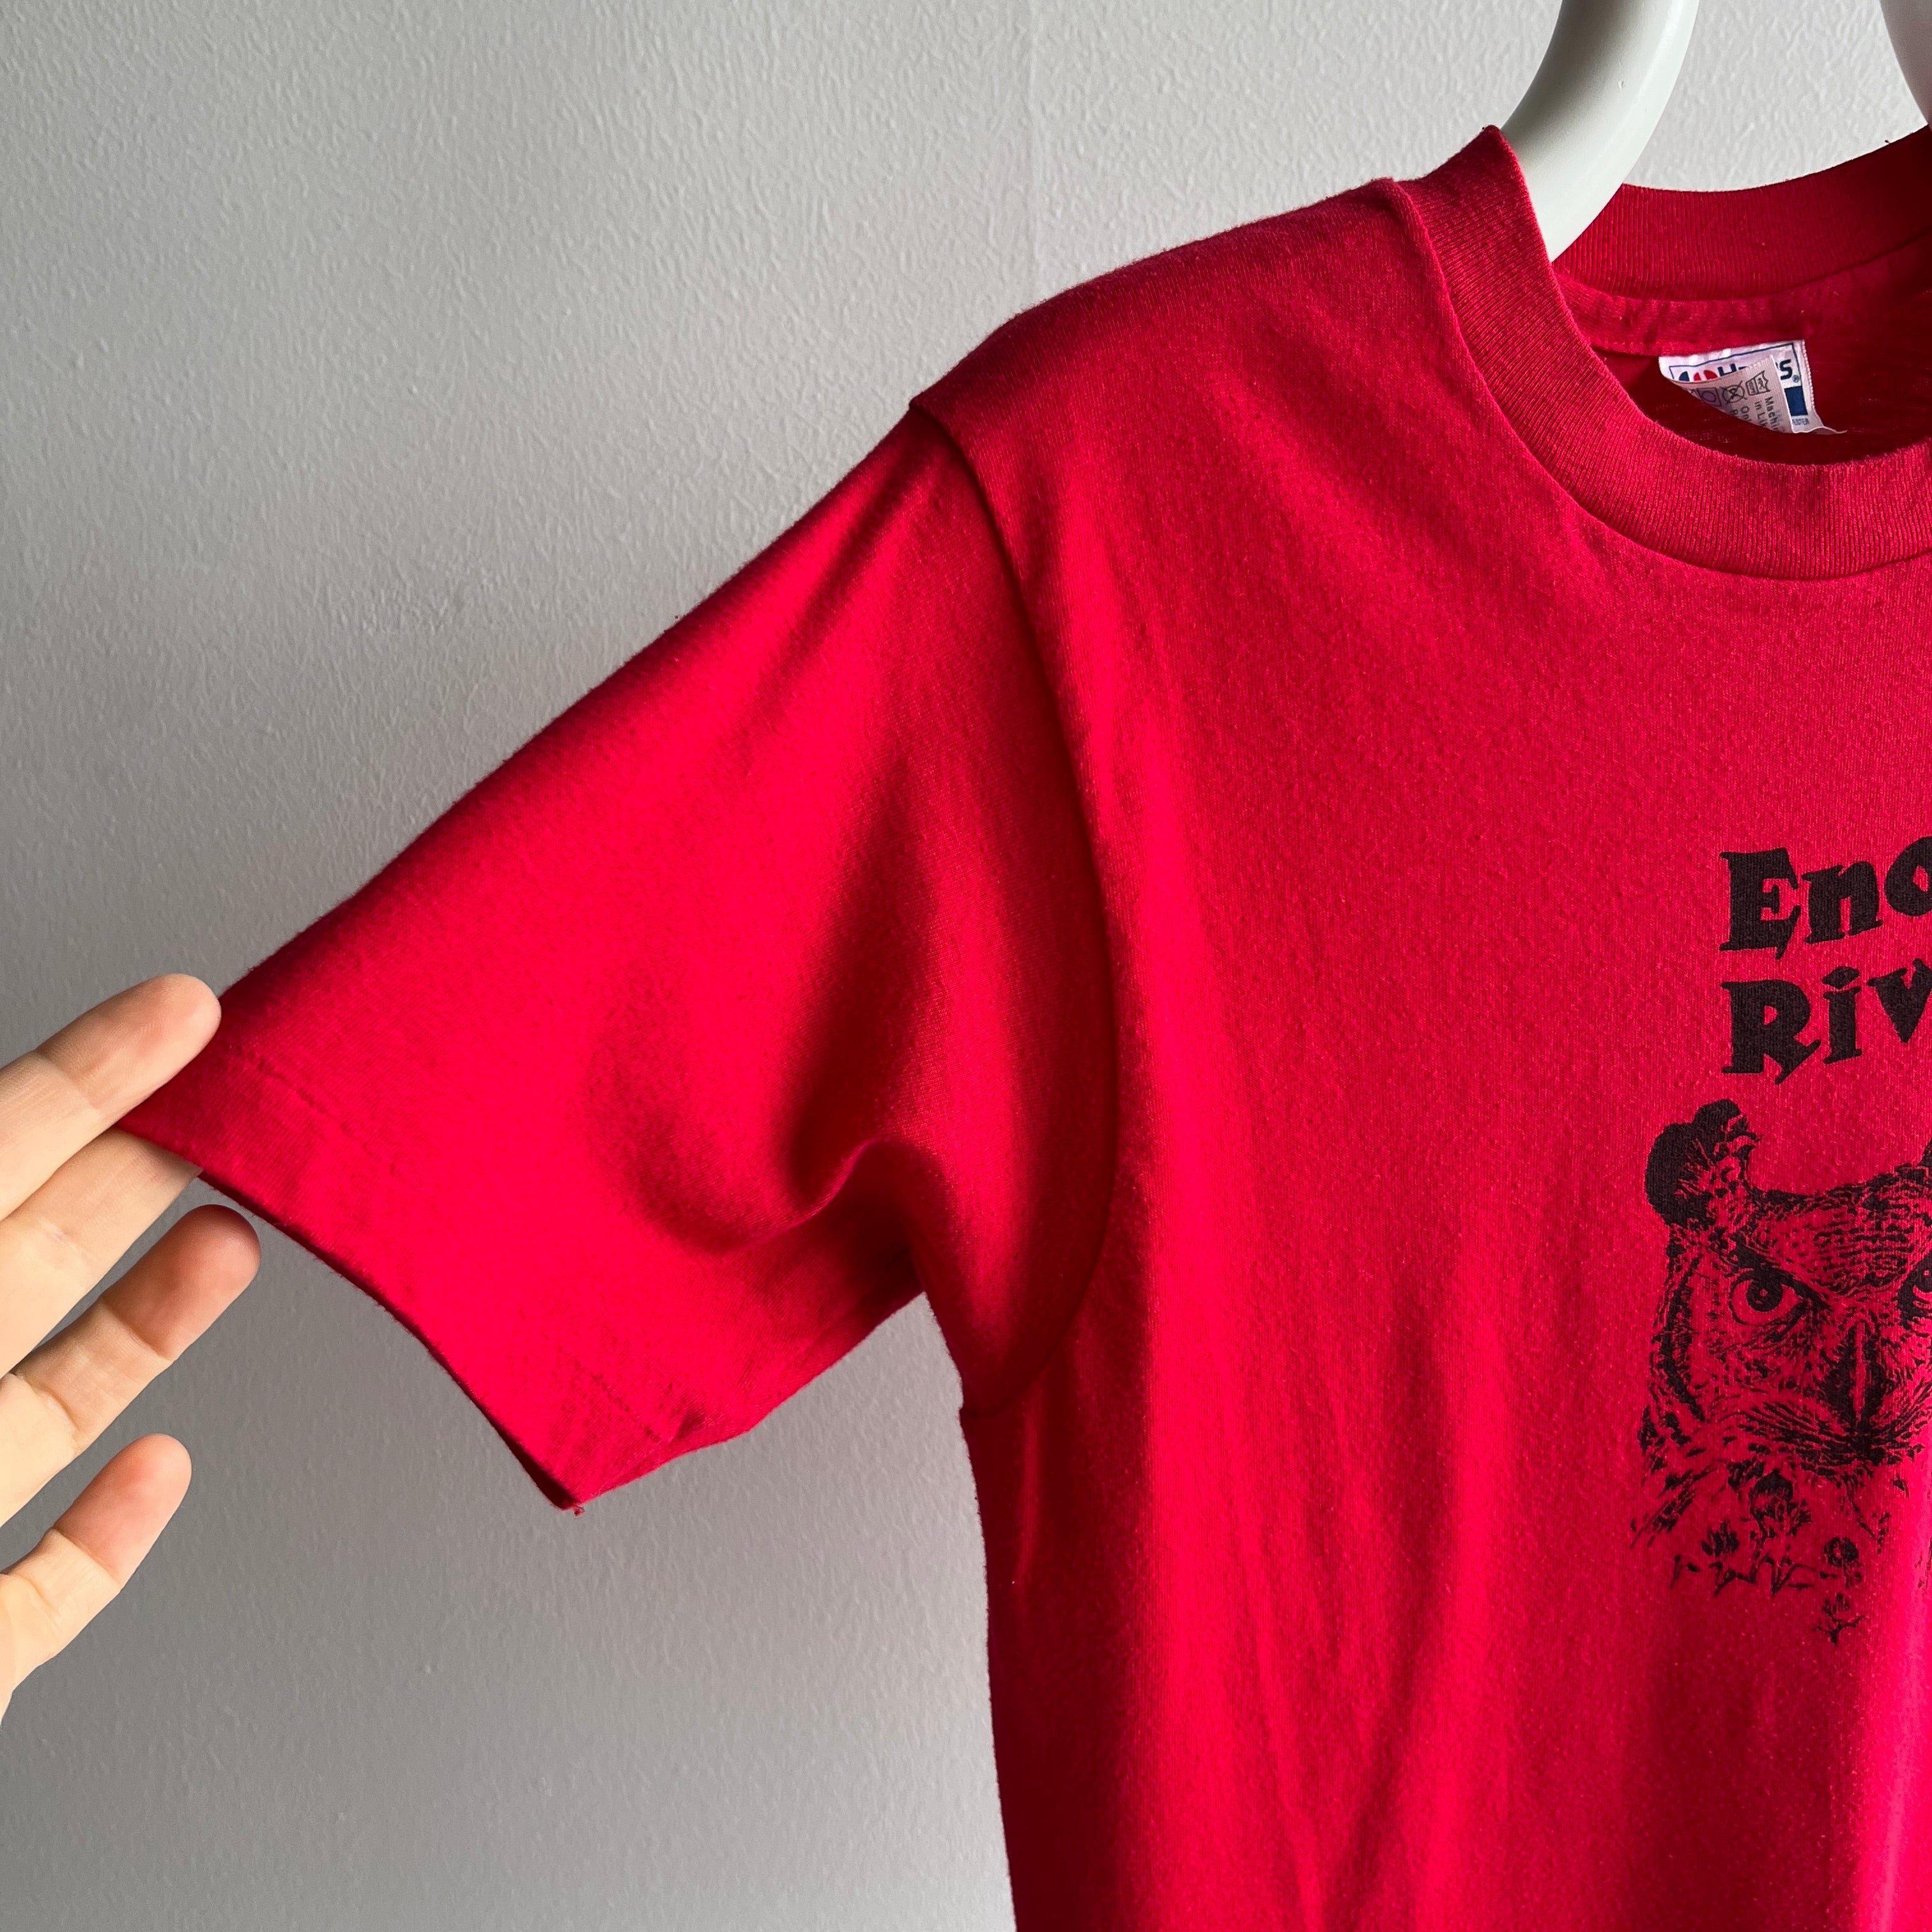 1980s Eno River Owl T-Shirt